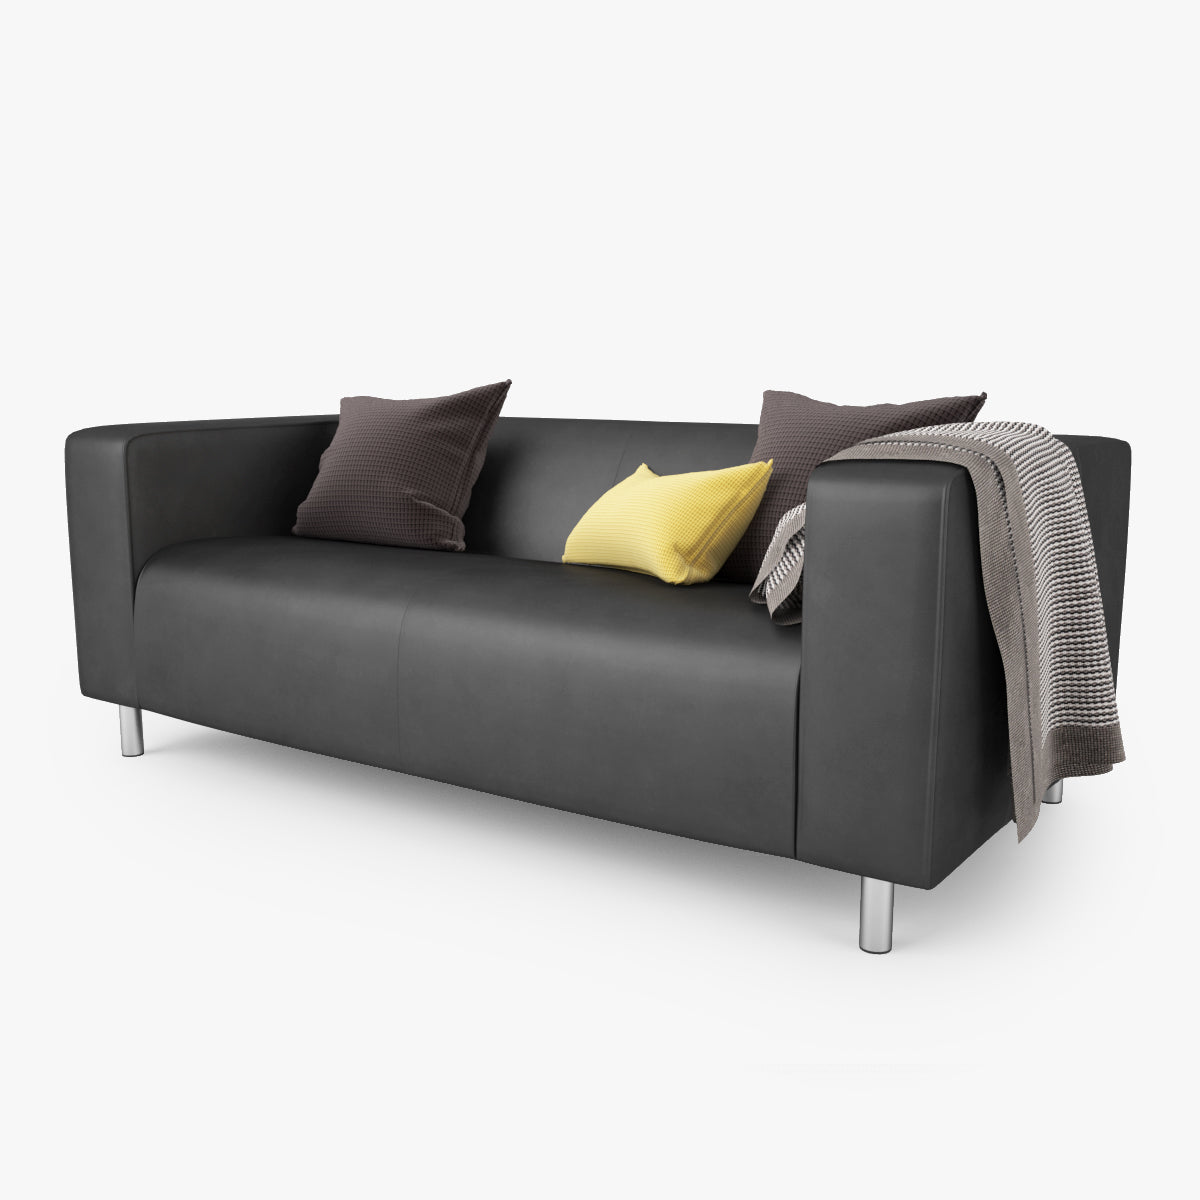 FREE IKEA  Klippan  Loveseat Sofa  3D  Model FaceQuad